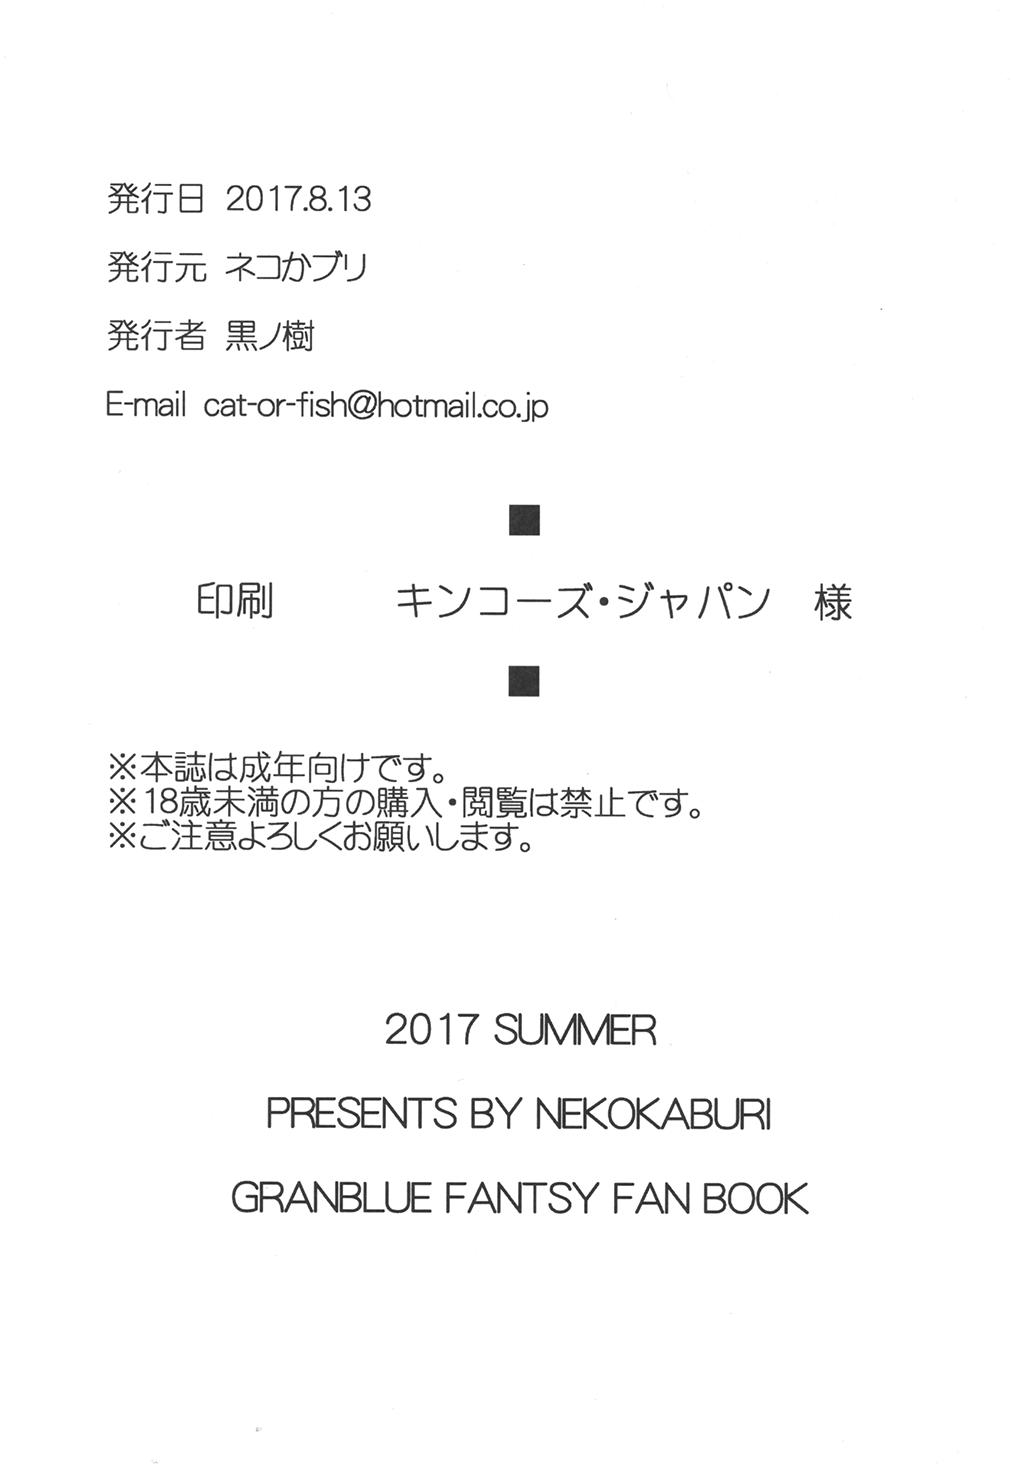 Gran Nyuu Fantasy Side G Shoujo D Pre Ban 12